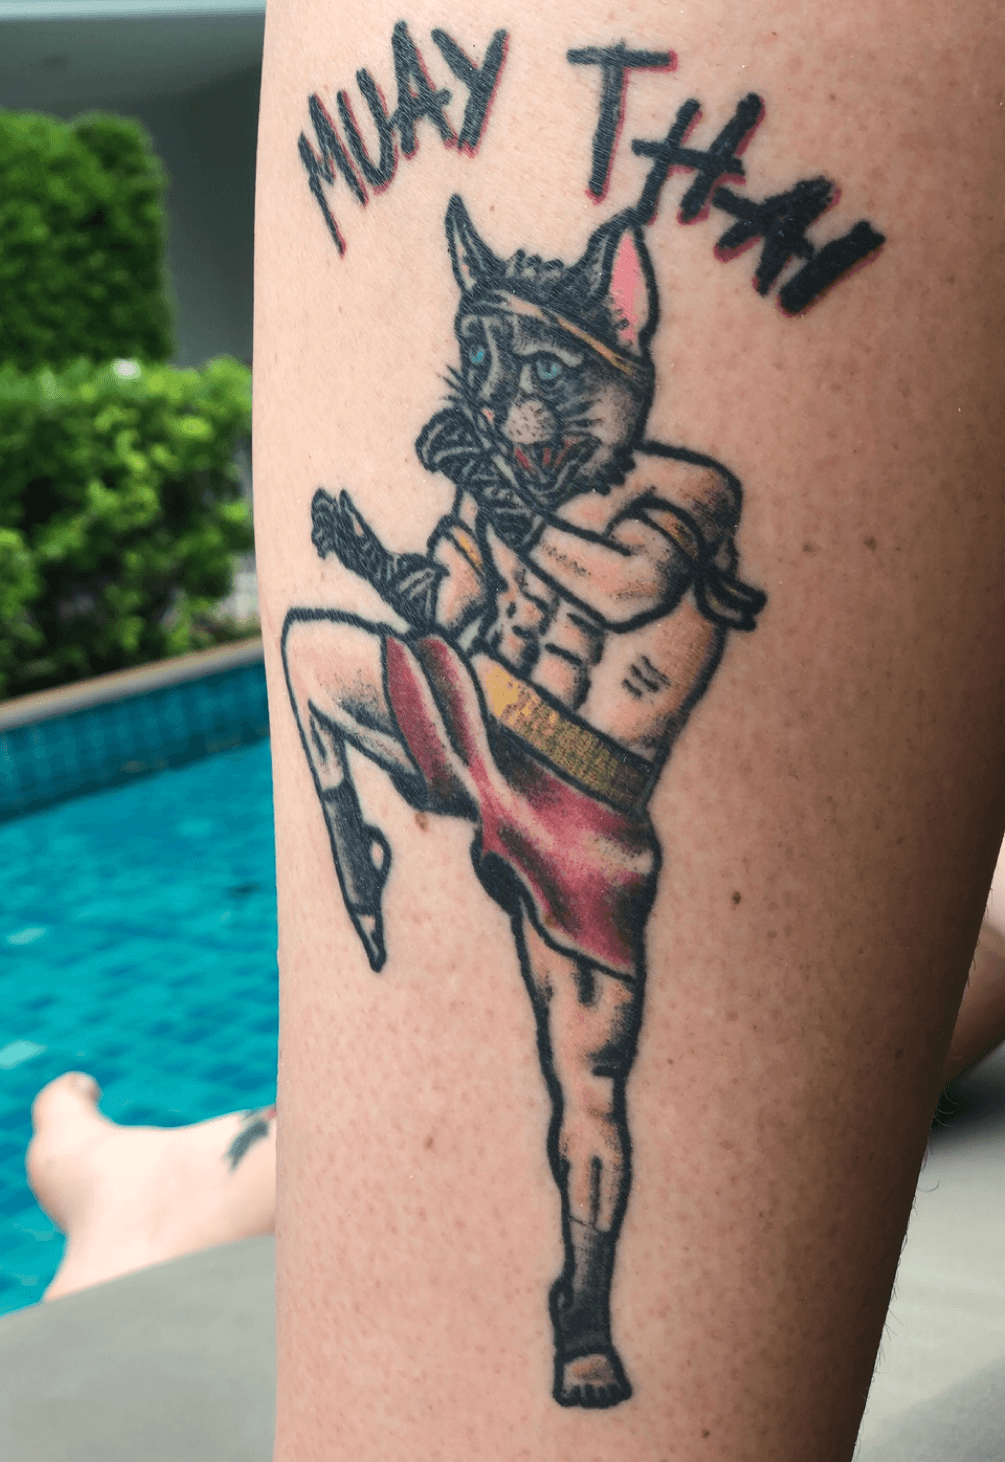 muay thai in Tattoos  Search in 13M Tattoos Now  Tattoodo